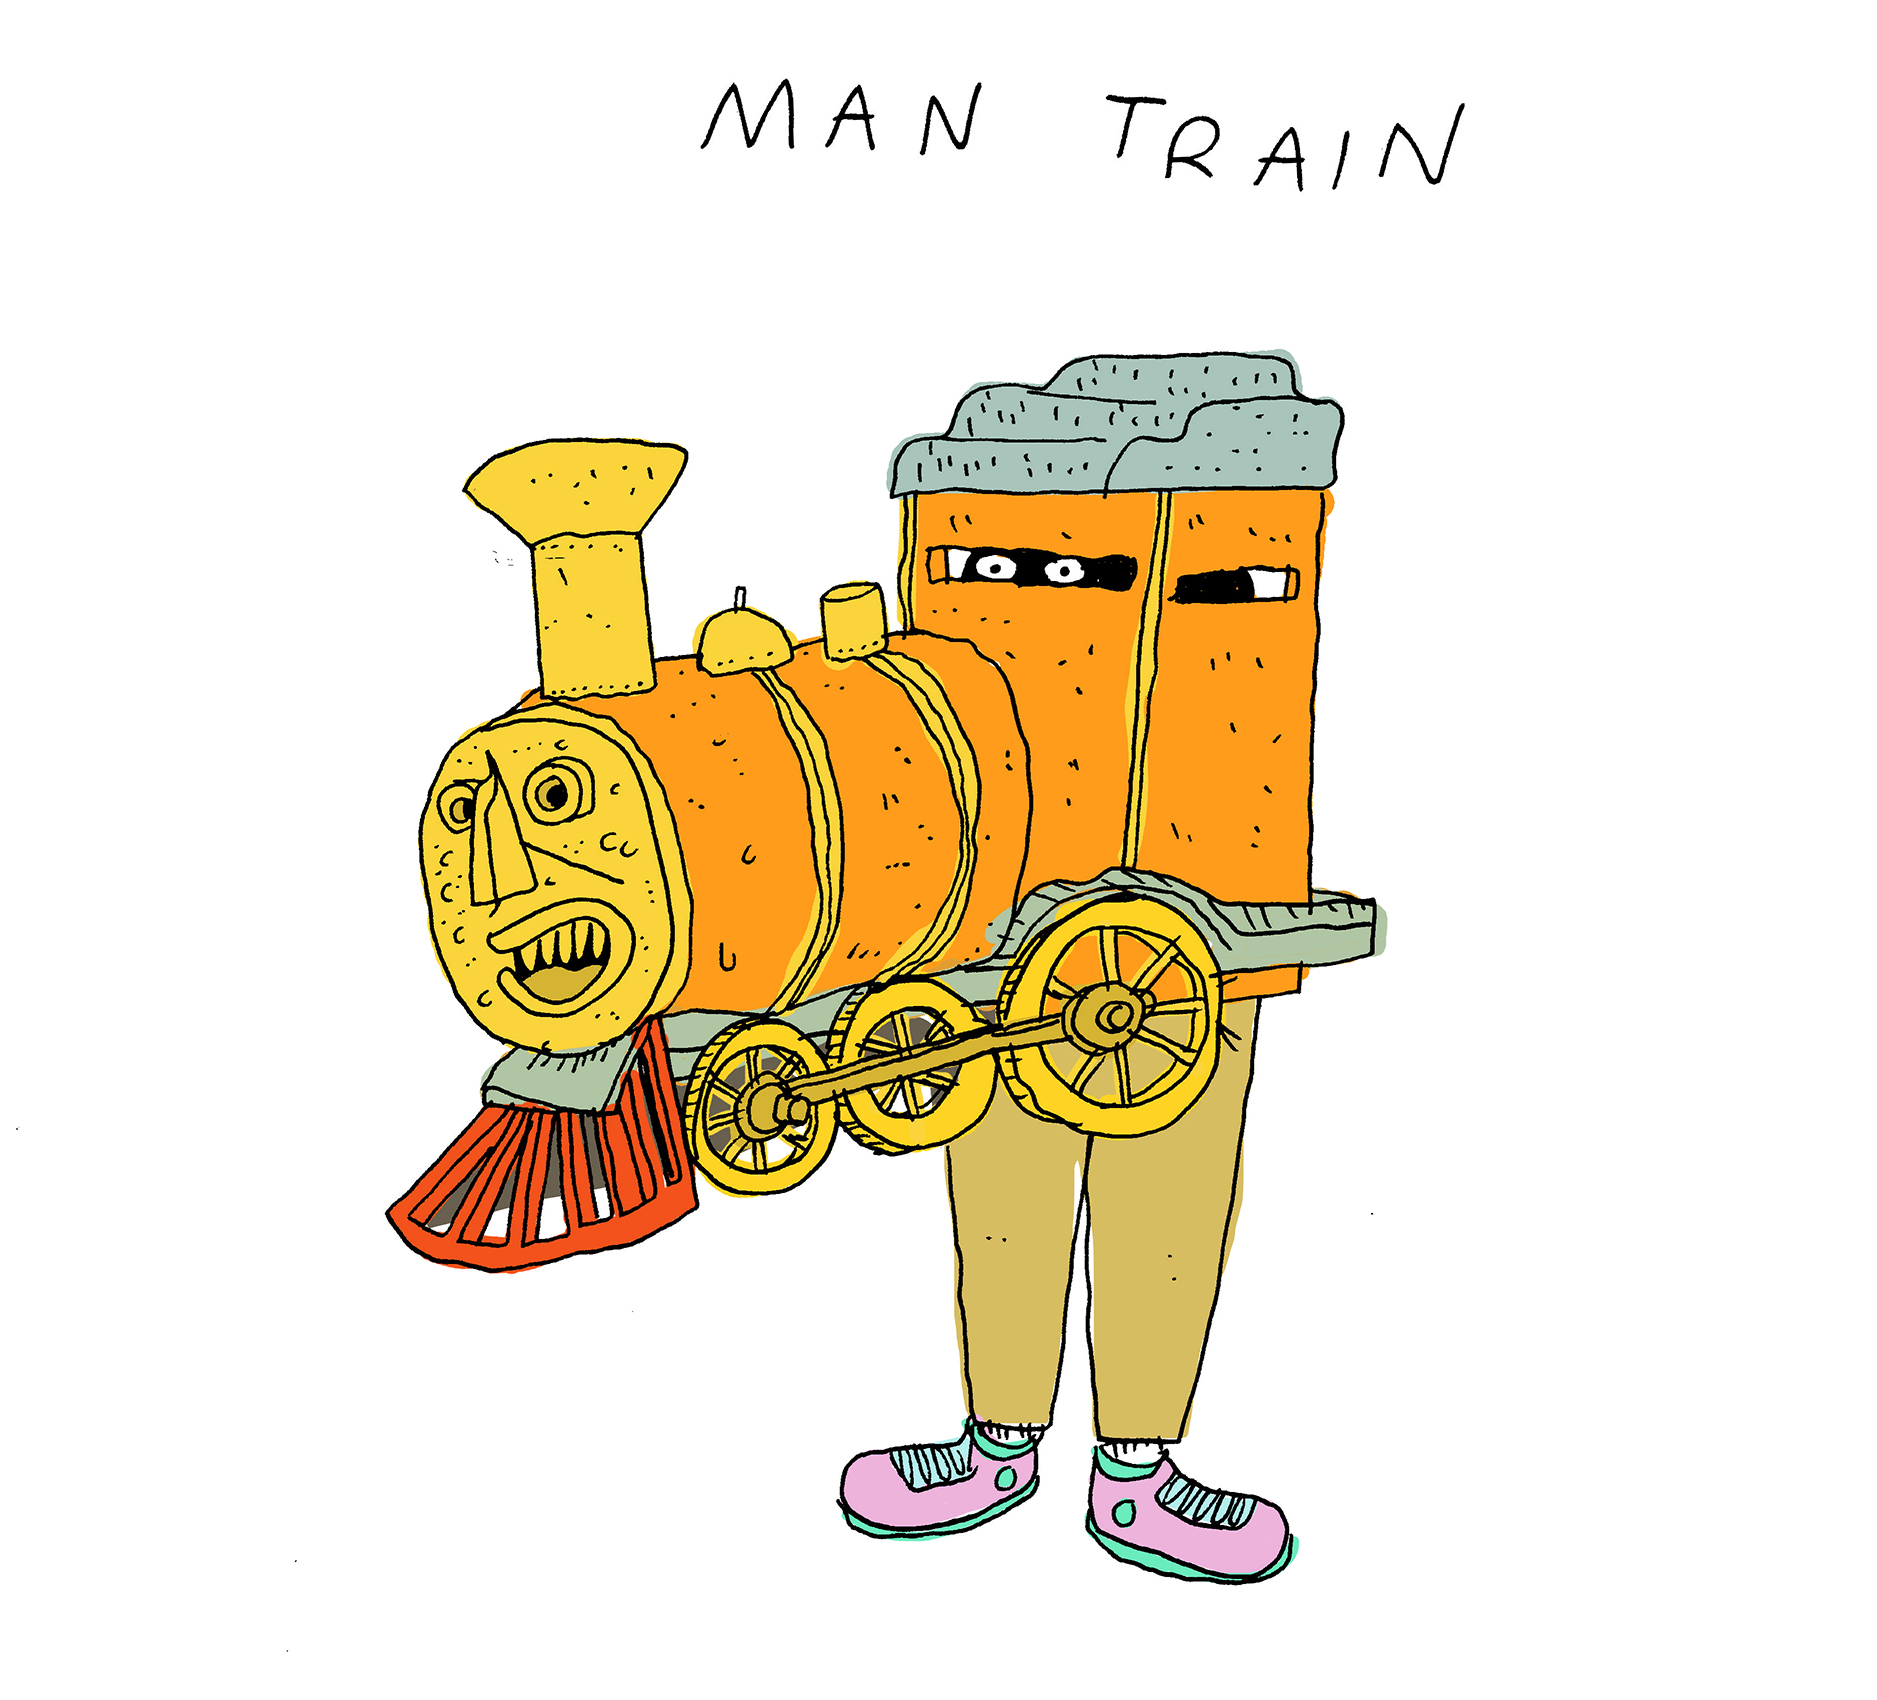 Man Train